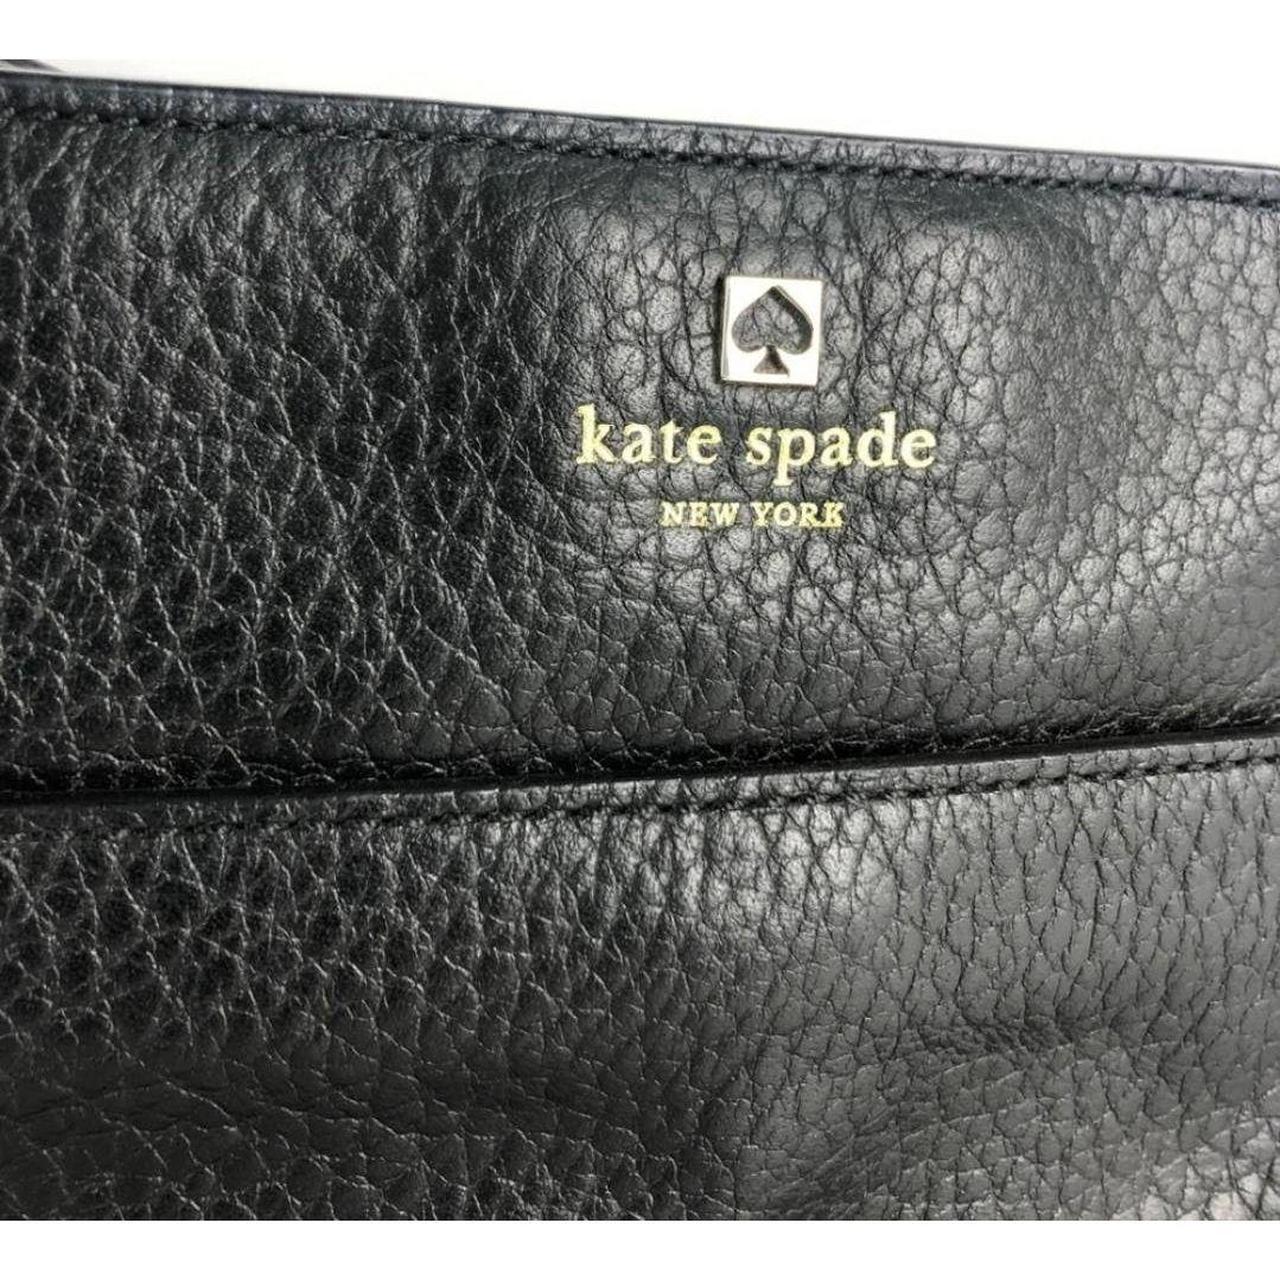 Kate Spade New York Women's Black and Gold Bag | Depop